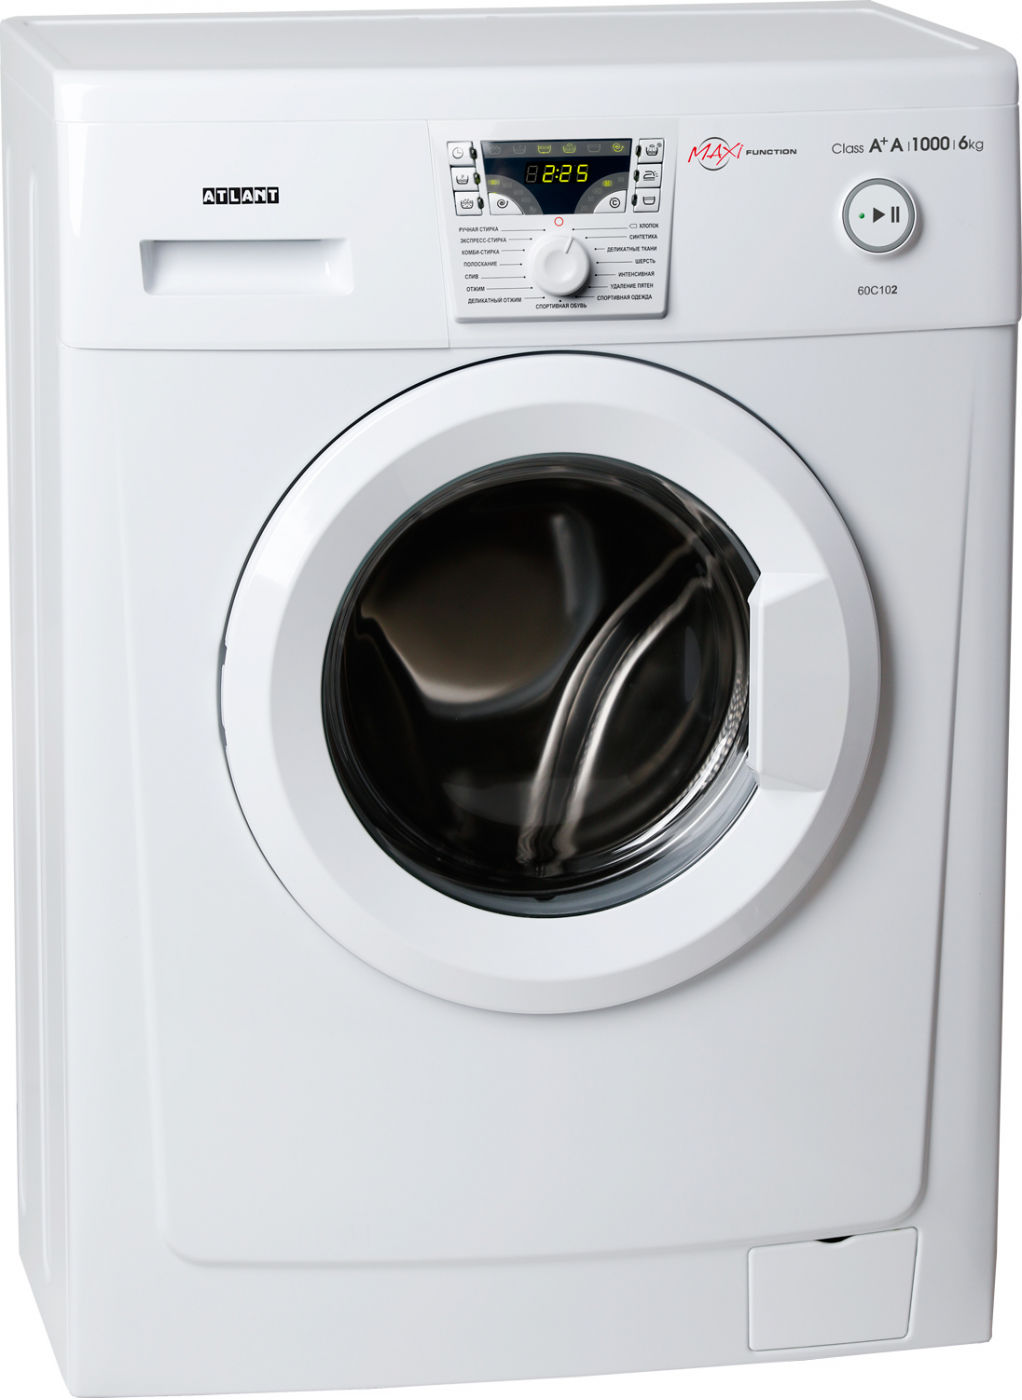 Maşina de spălat rufe Atlant СМА 60C102-000